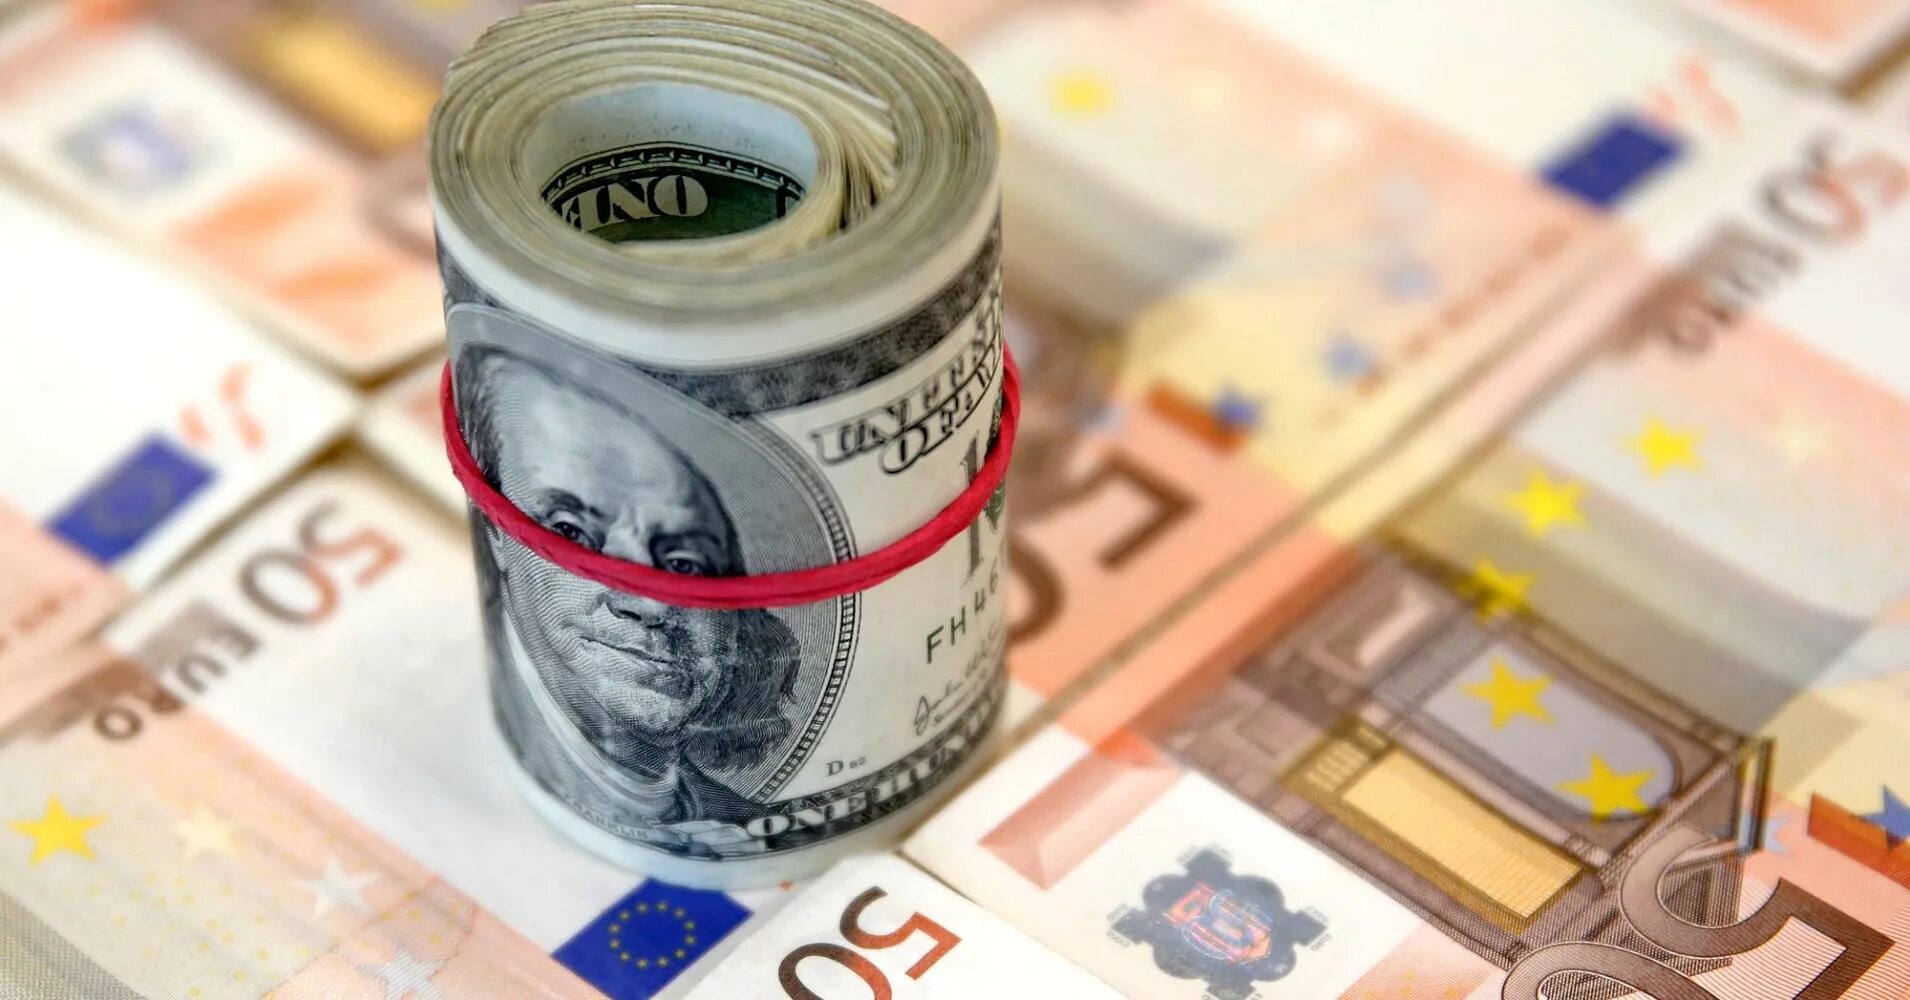 Евро доллар фунт. Доллар и евро. Евро валюта. Валюта доллар евро. Деньги евро доллары.